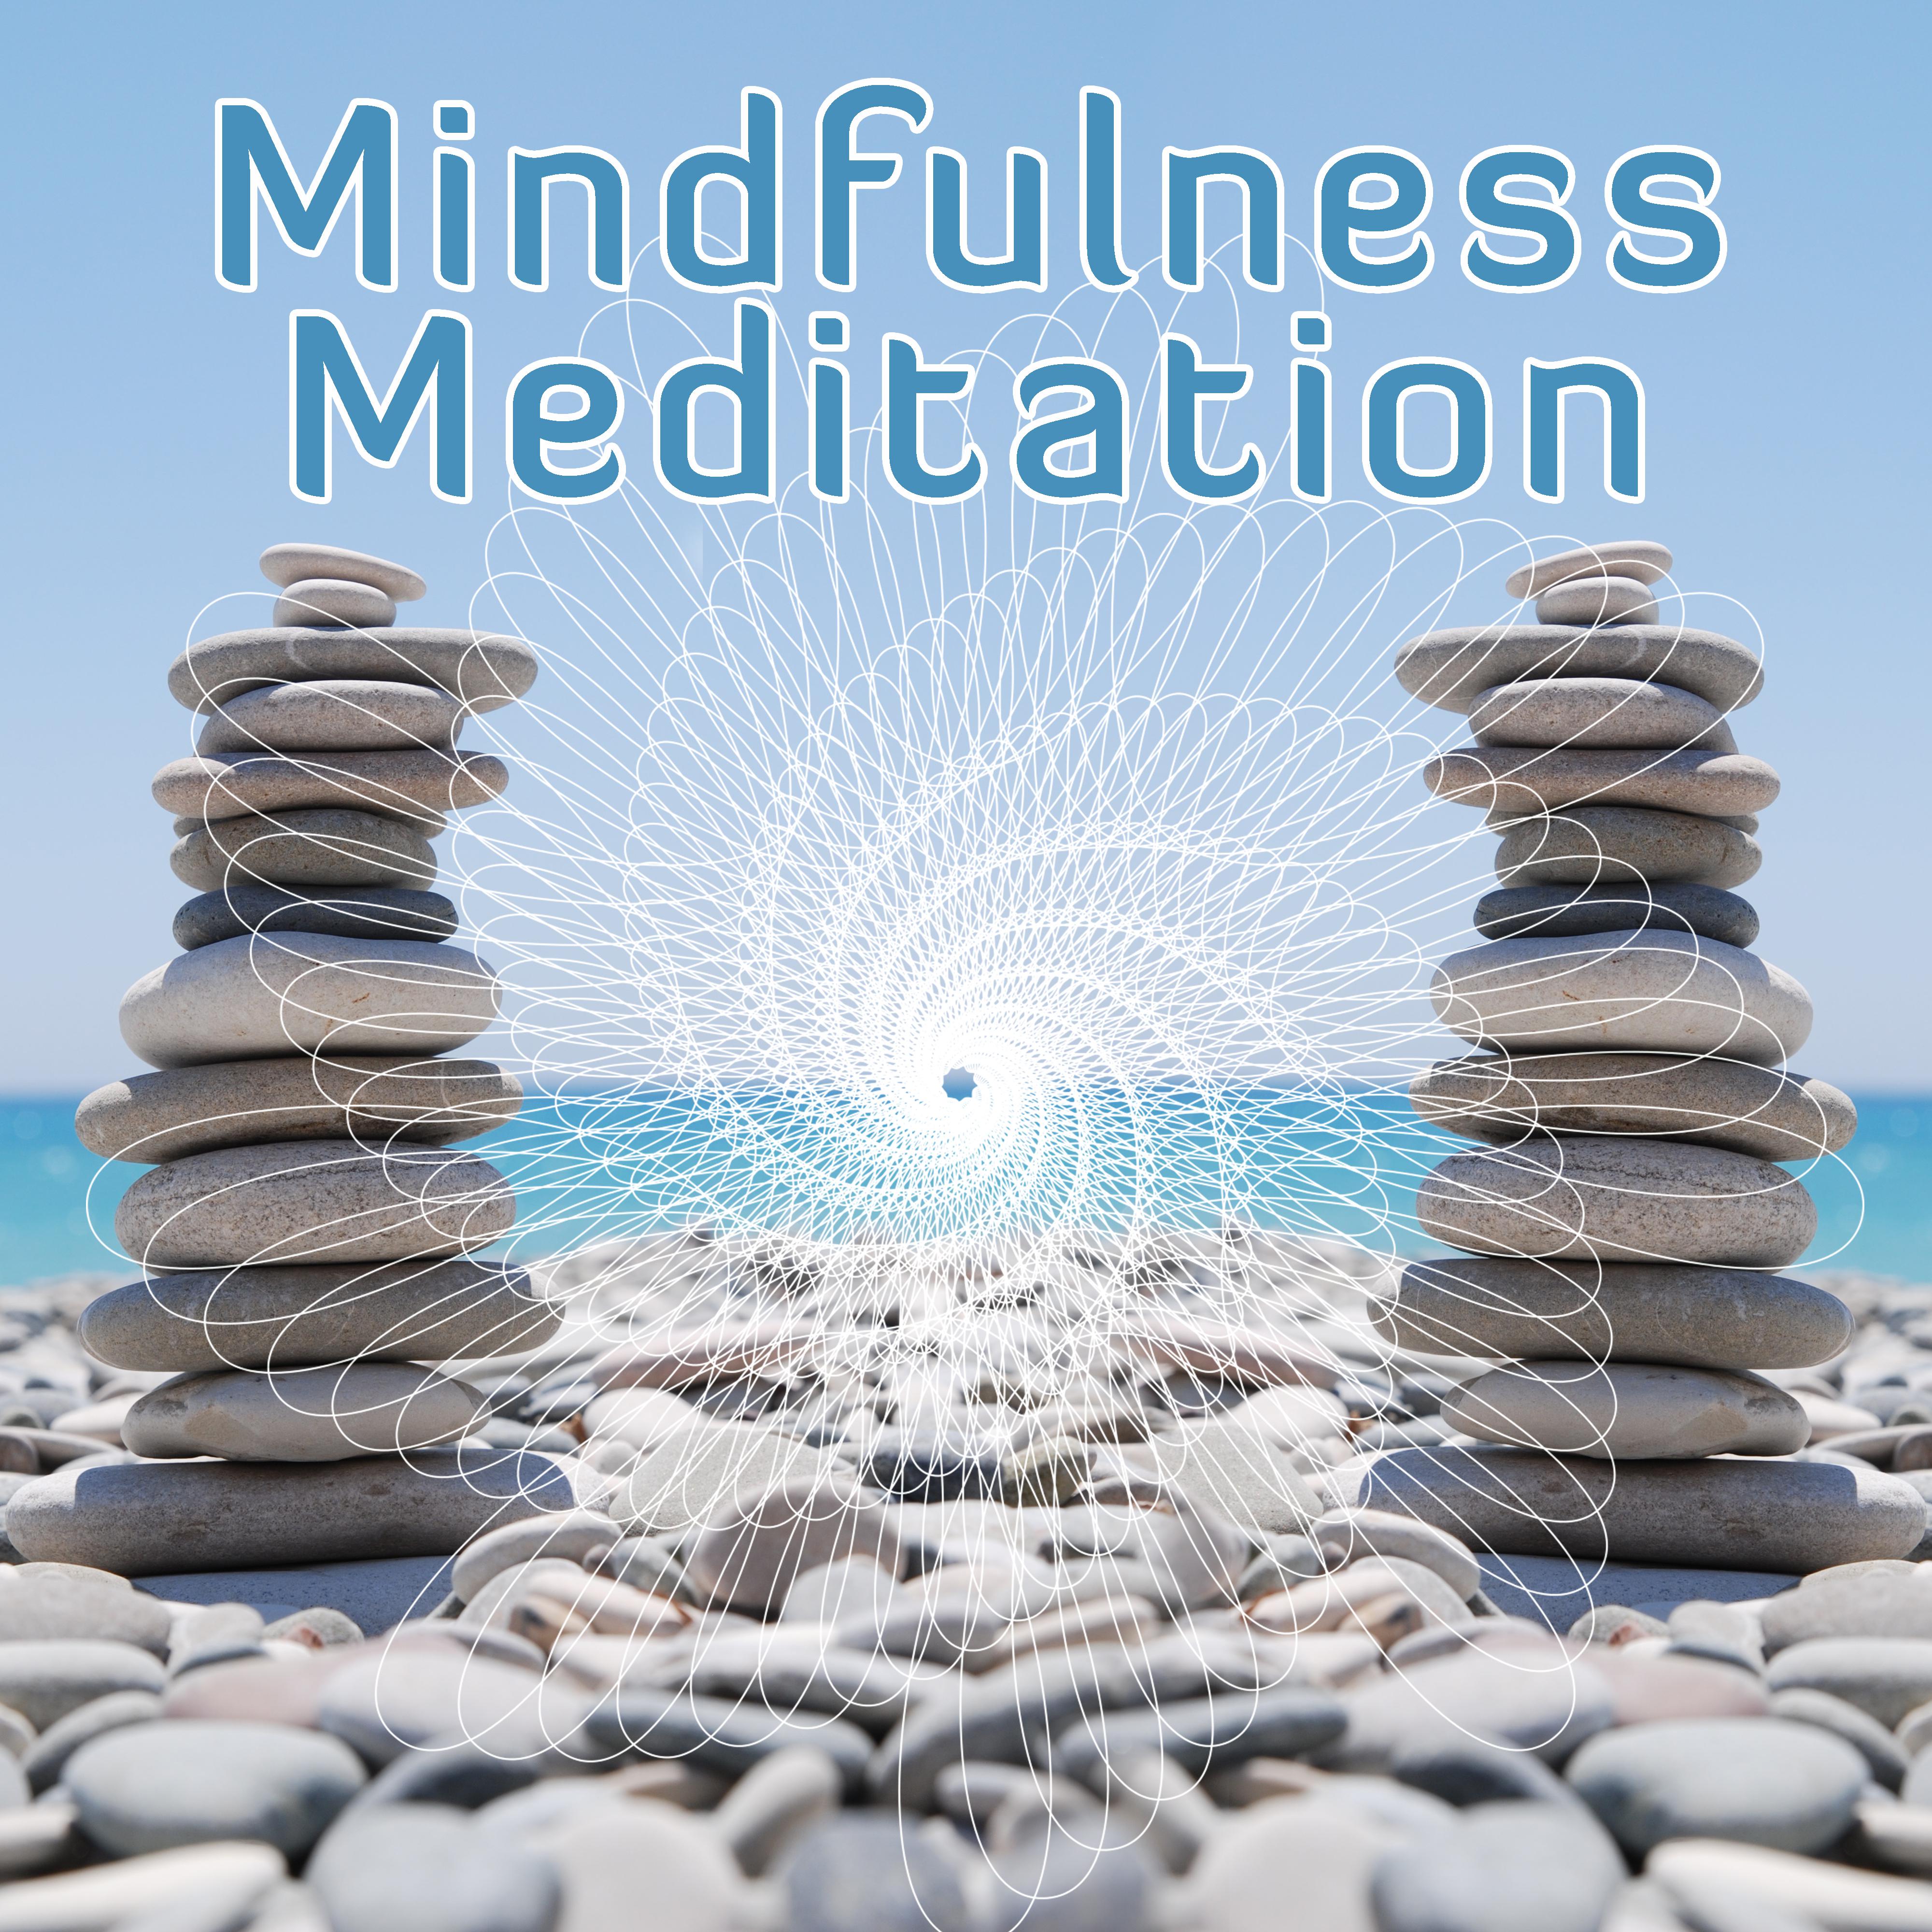 Mindfulness Meditation  Training Yoga, Chakra Balancing, Meditate, Nature Sounds to Calm Down, Relaxation